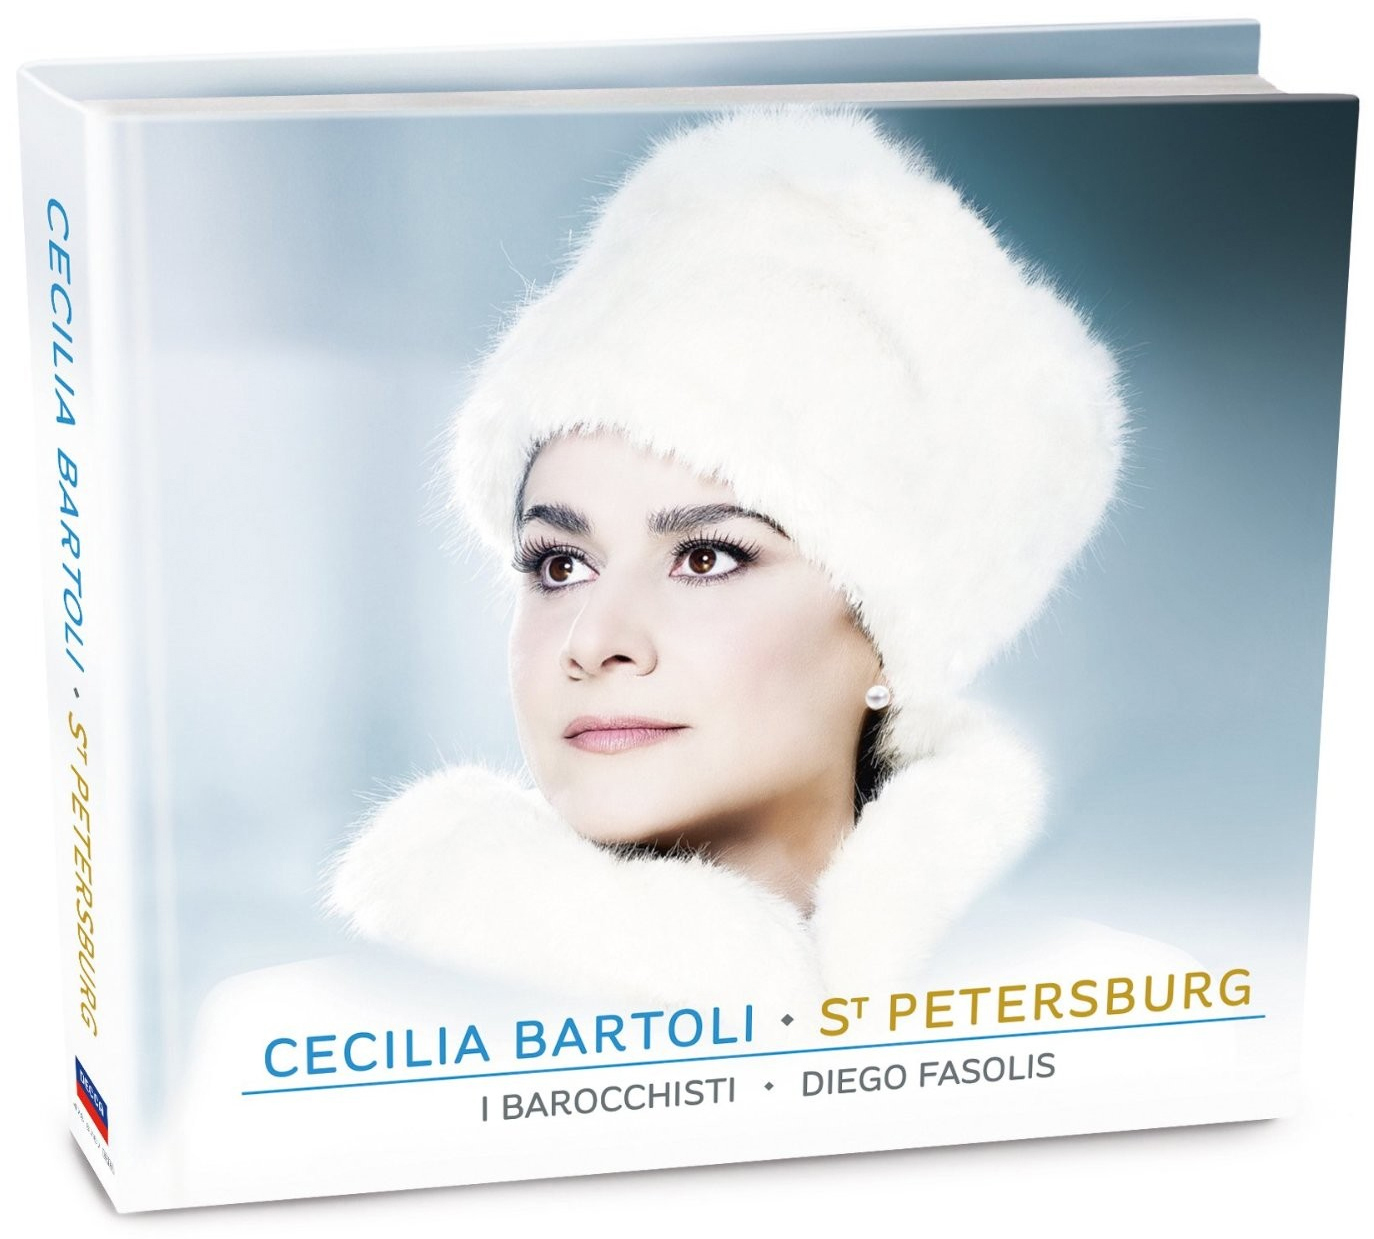 St Petersburg - Cecilia Bartoli